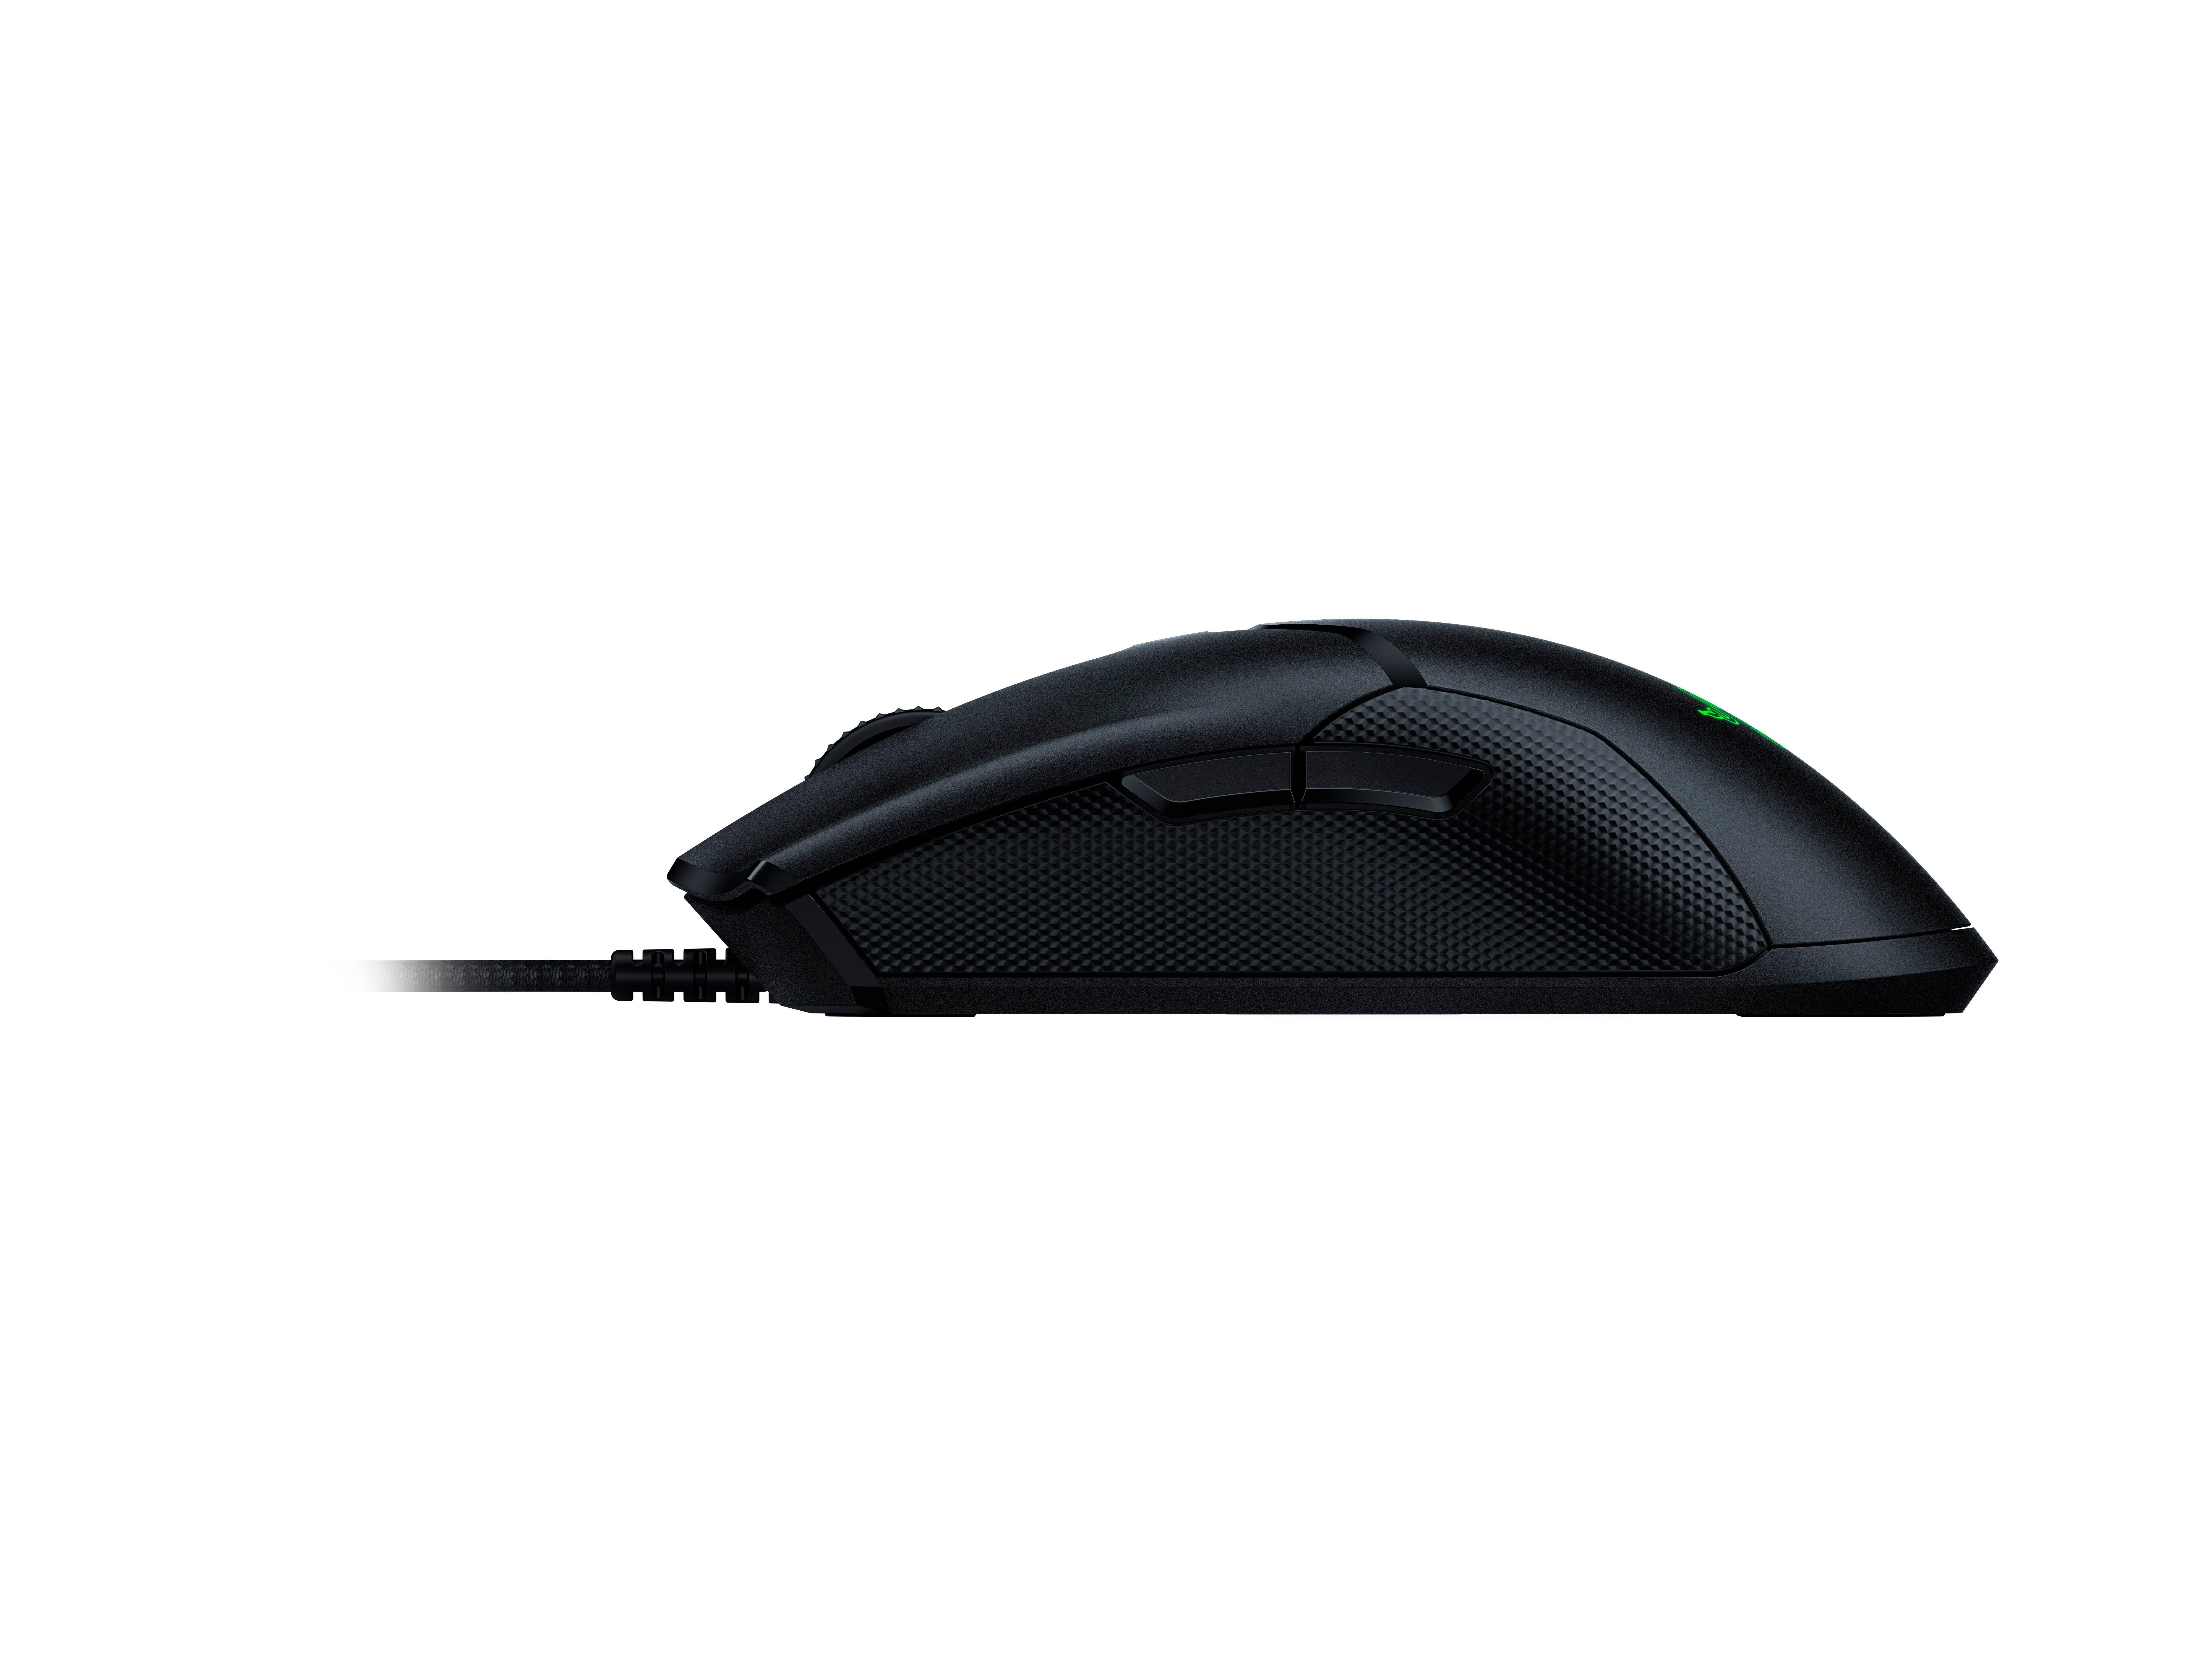 Razer Naga X Wired MMO Gaming Mouse